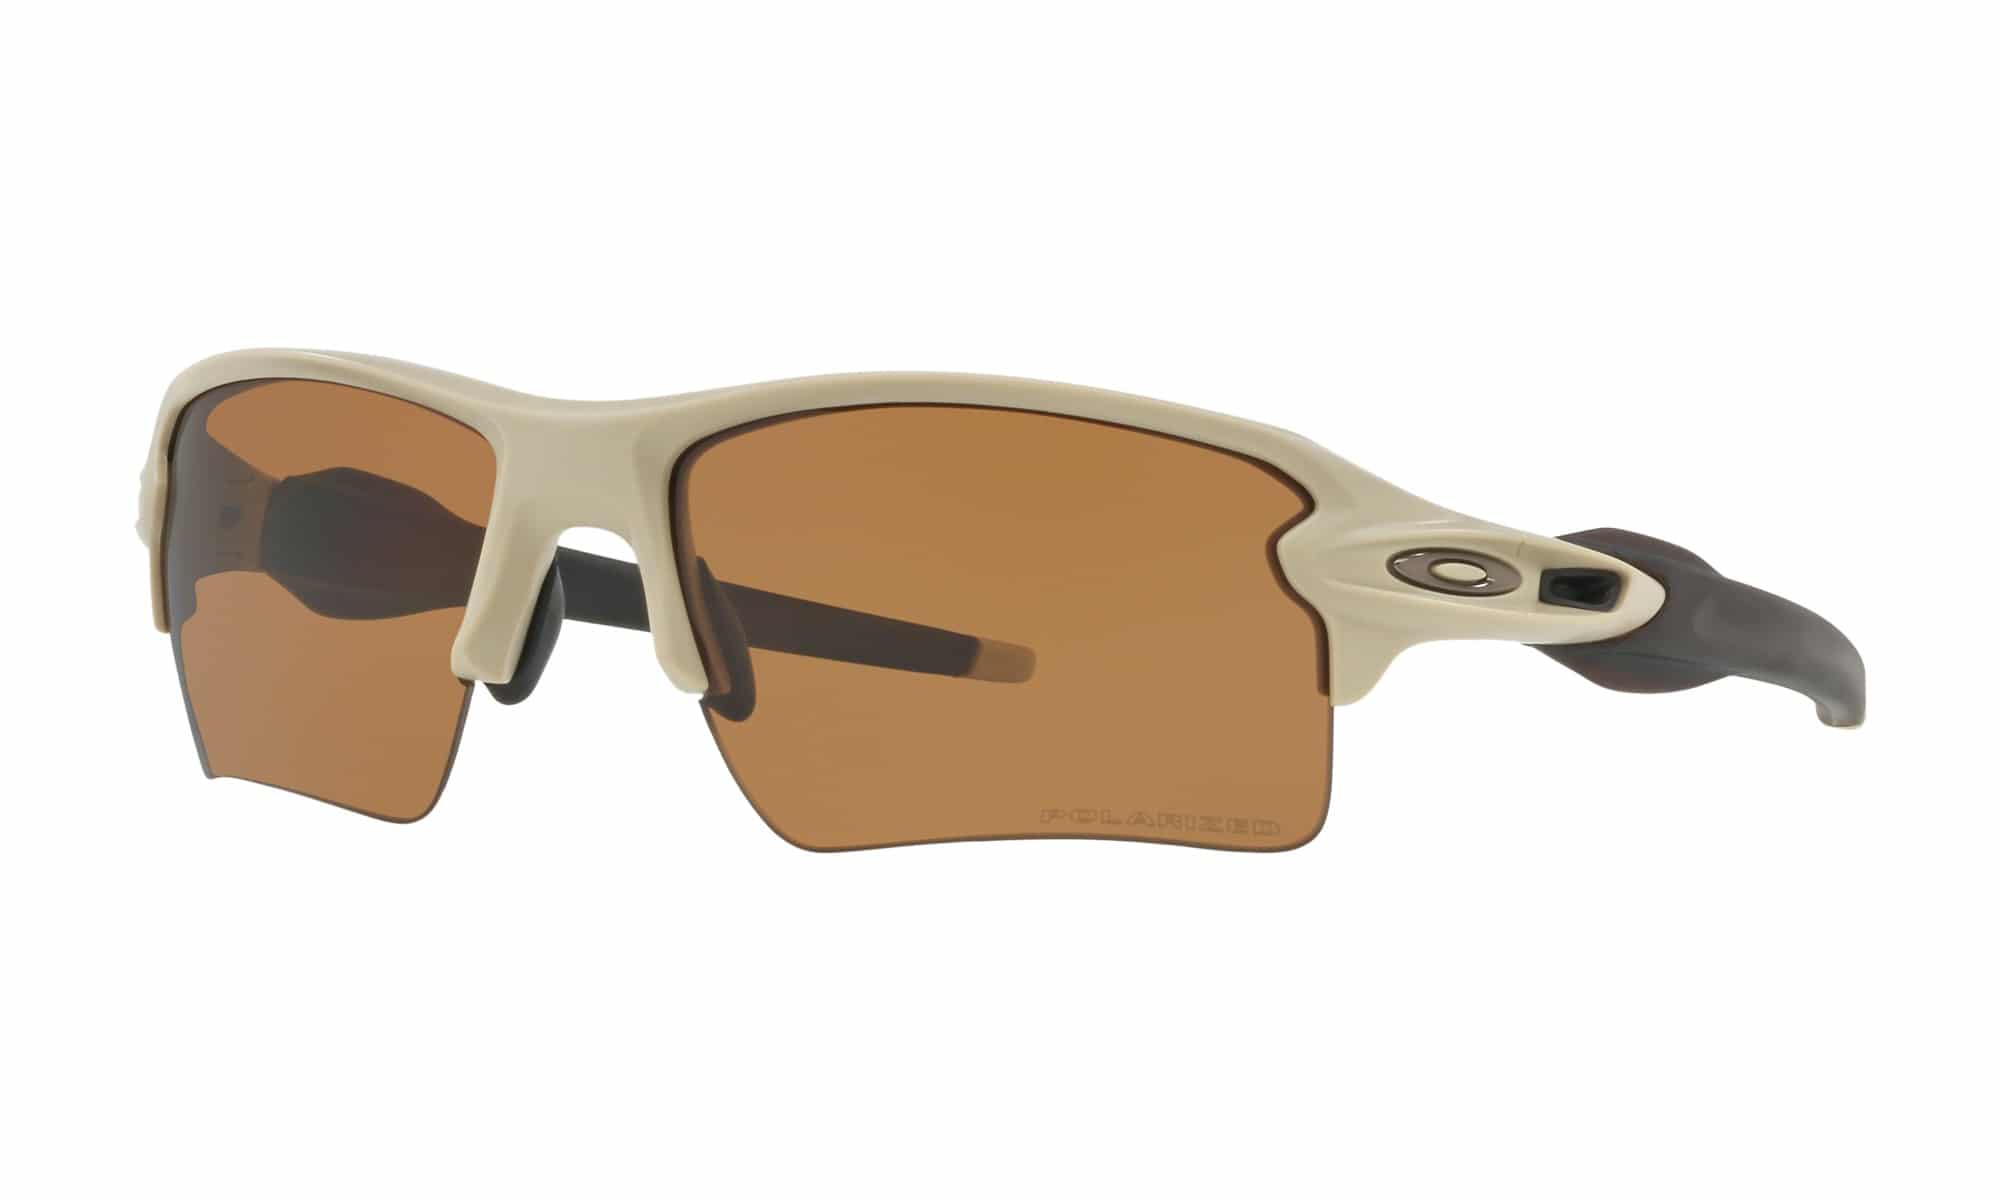 Oakley Flak 2.0 XL Sunglasses - SafetyGearPro.com - #1 Online Safety ...